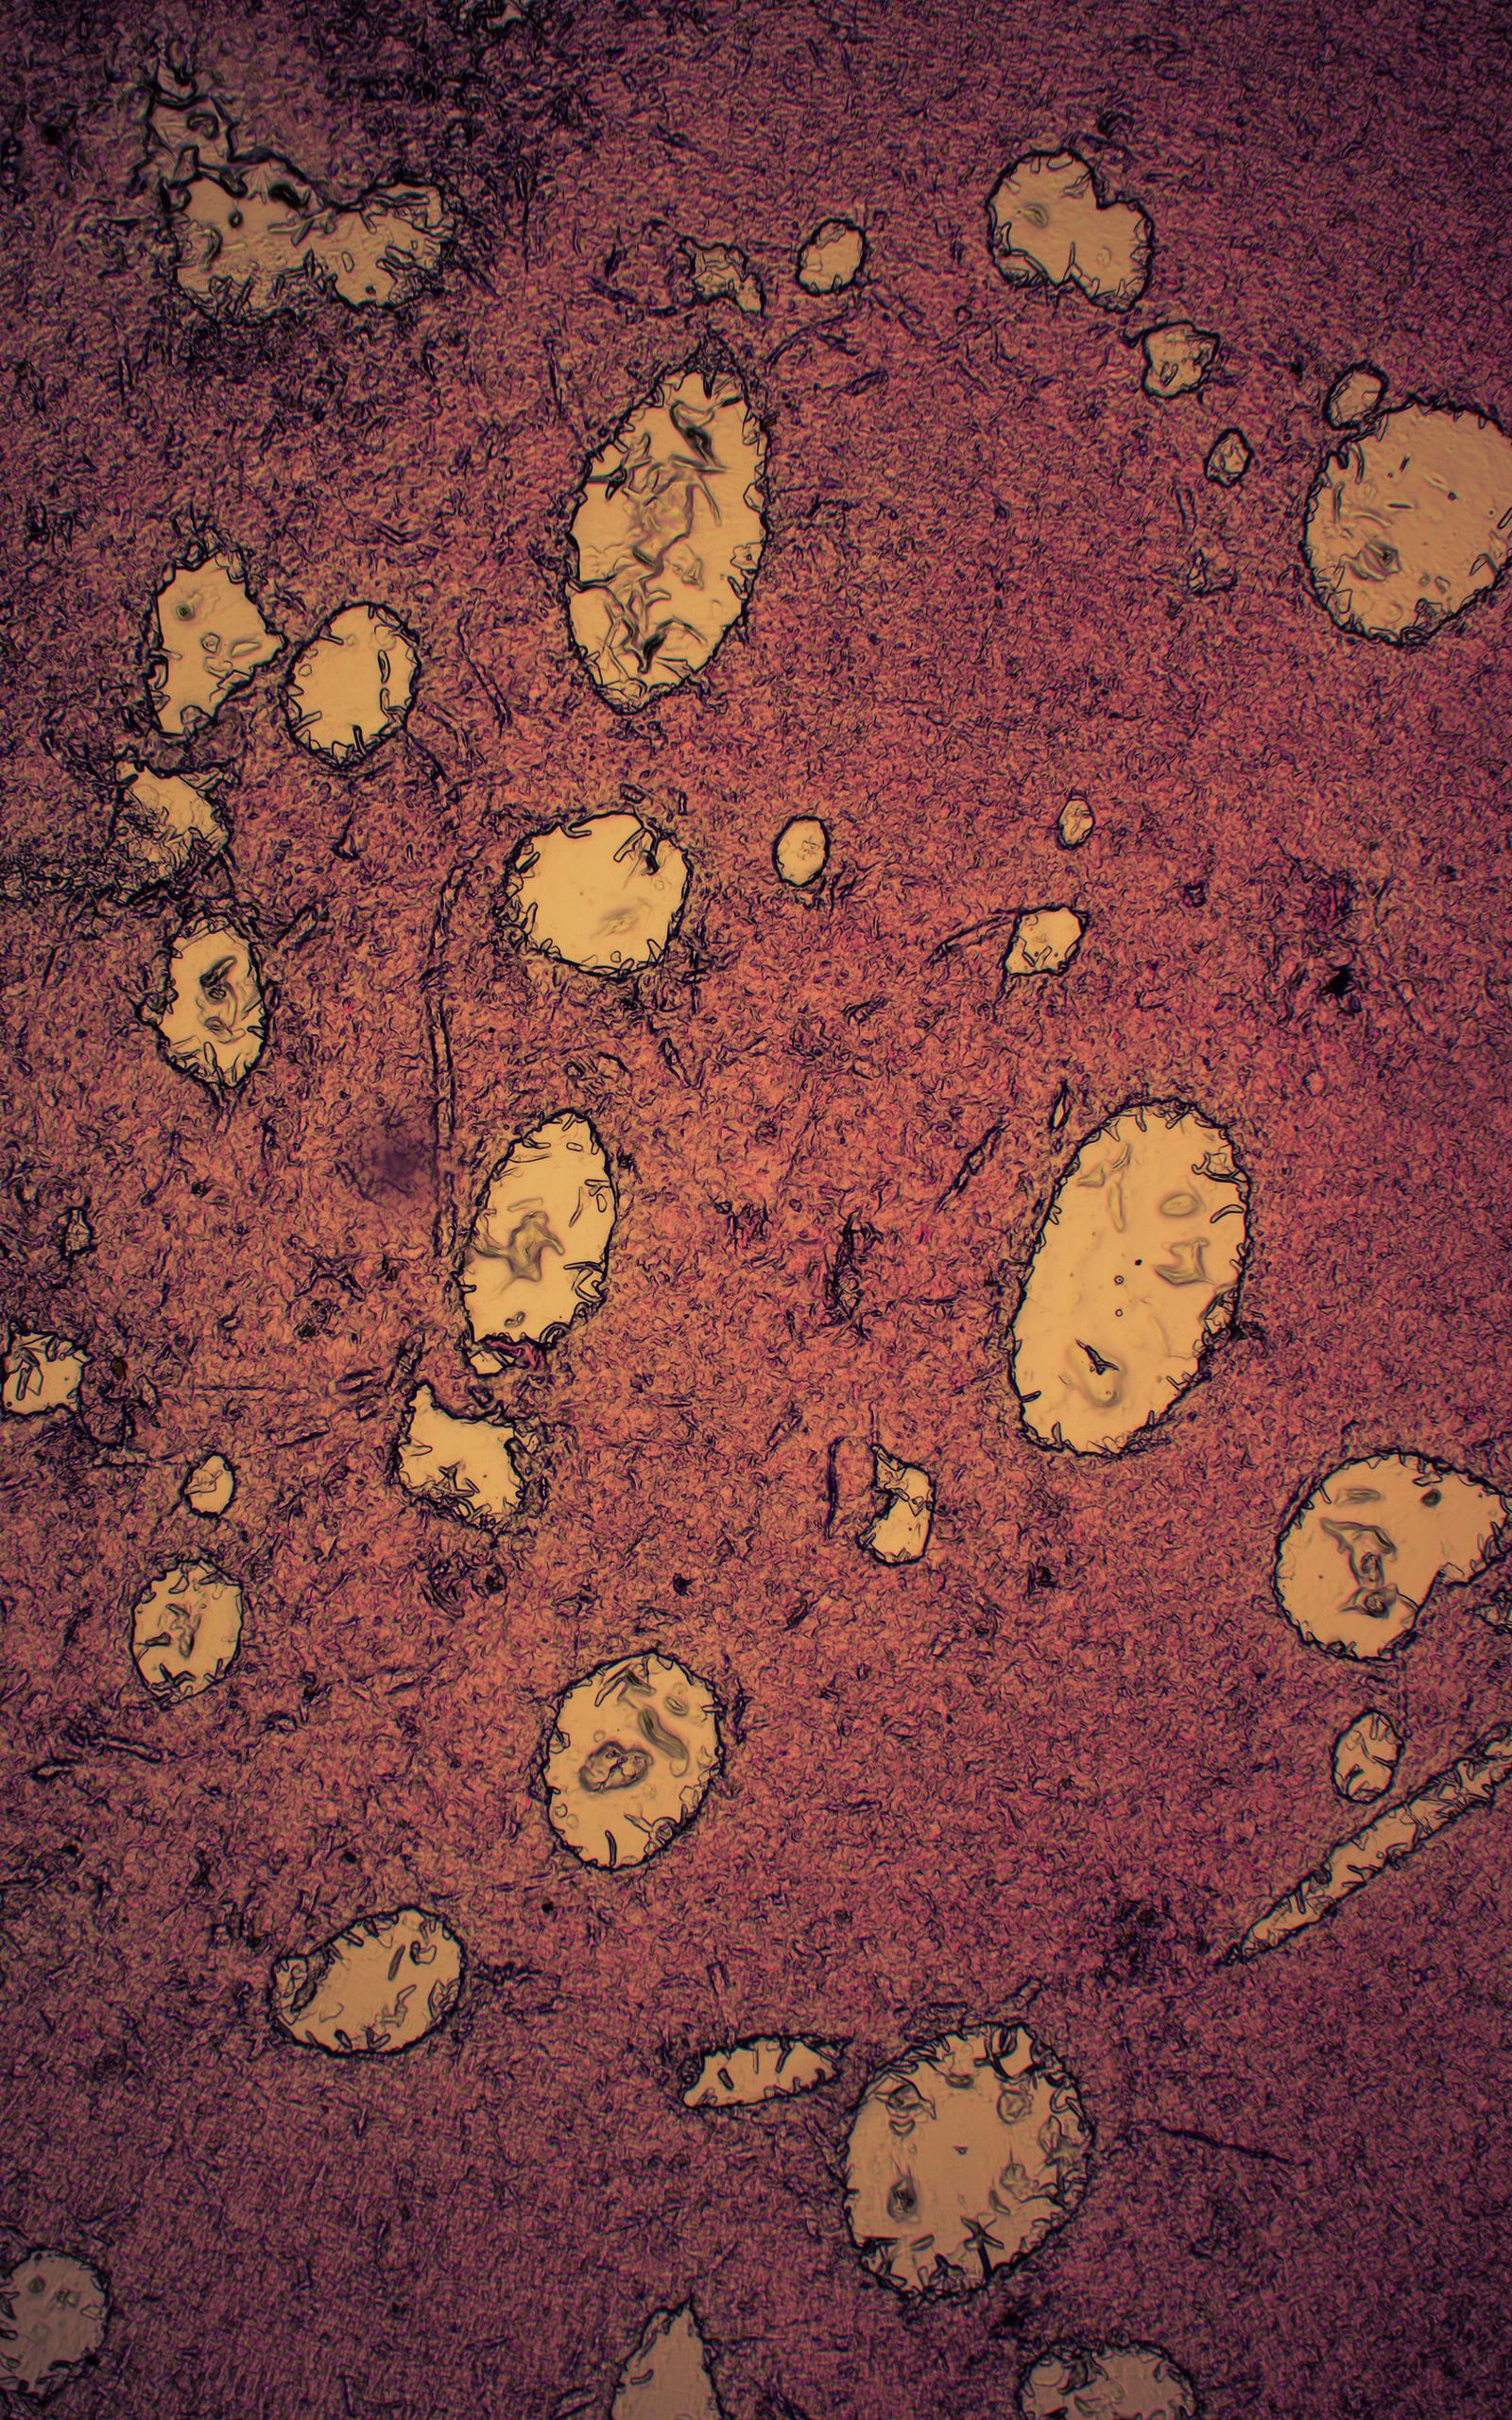 © Grzegorz Wełnicki - Microscopic image of a pancreatic flake printed with bioink.